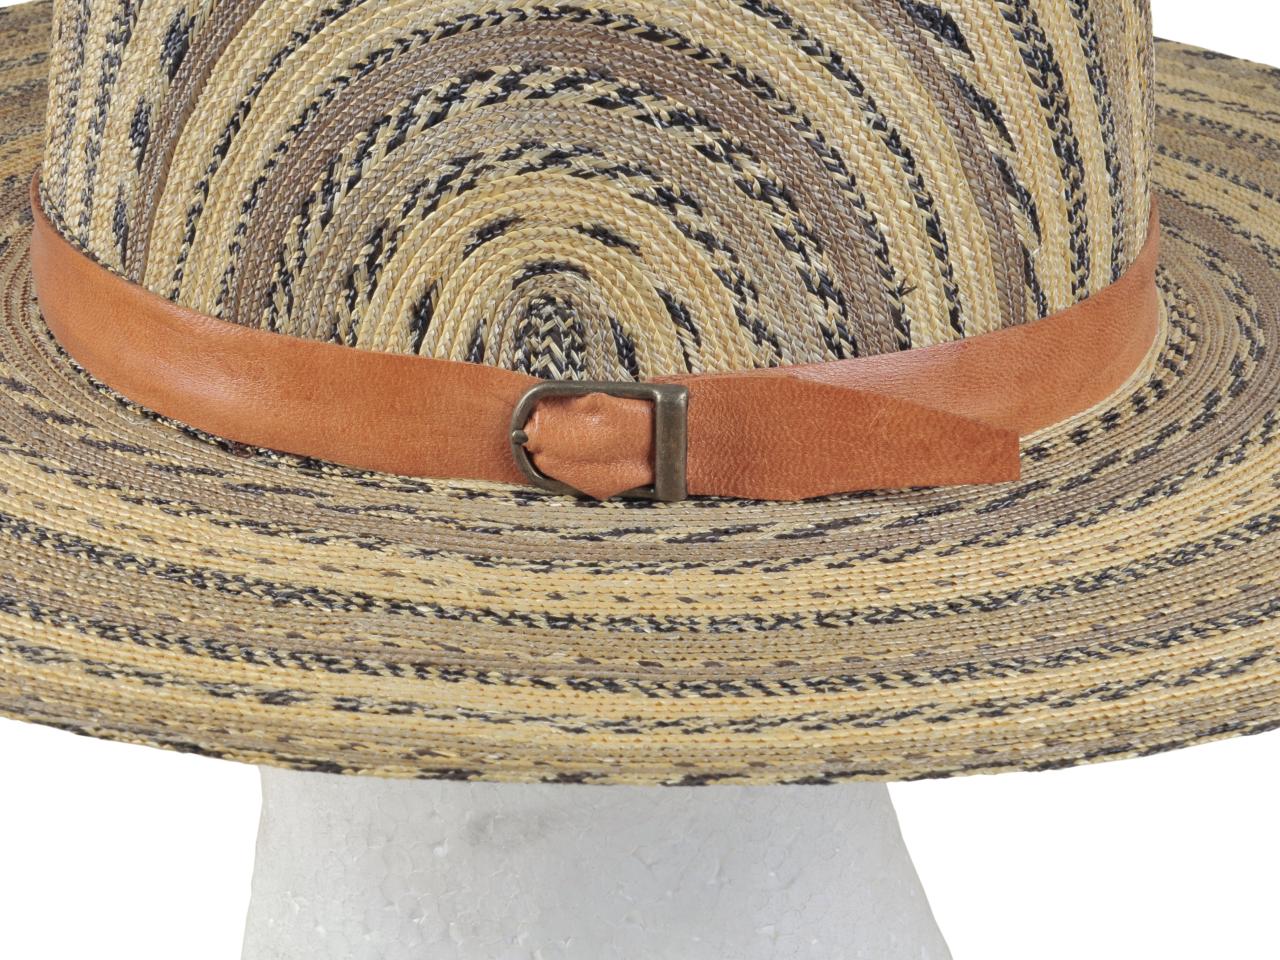 Detalle de sombrero de arco, tejido en paja teatina natural y teñida con tintes naturales